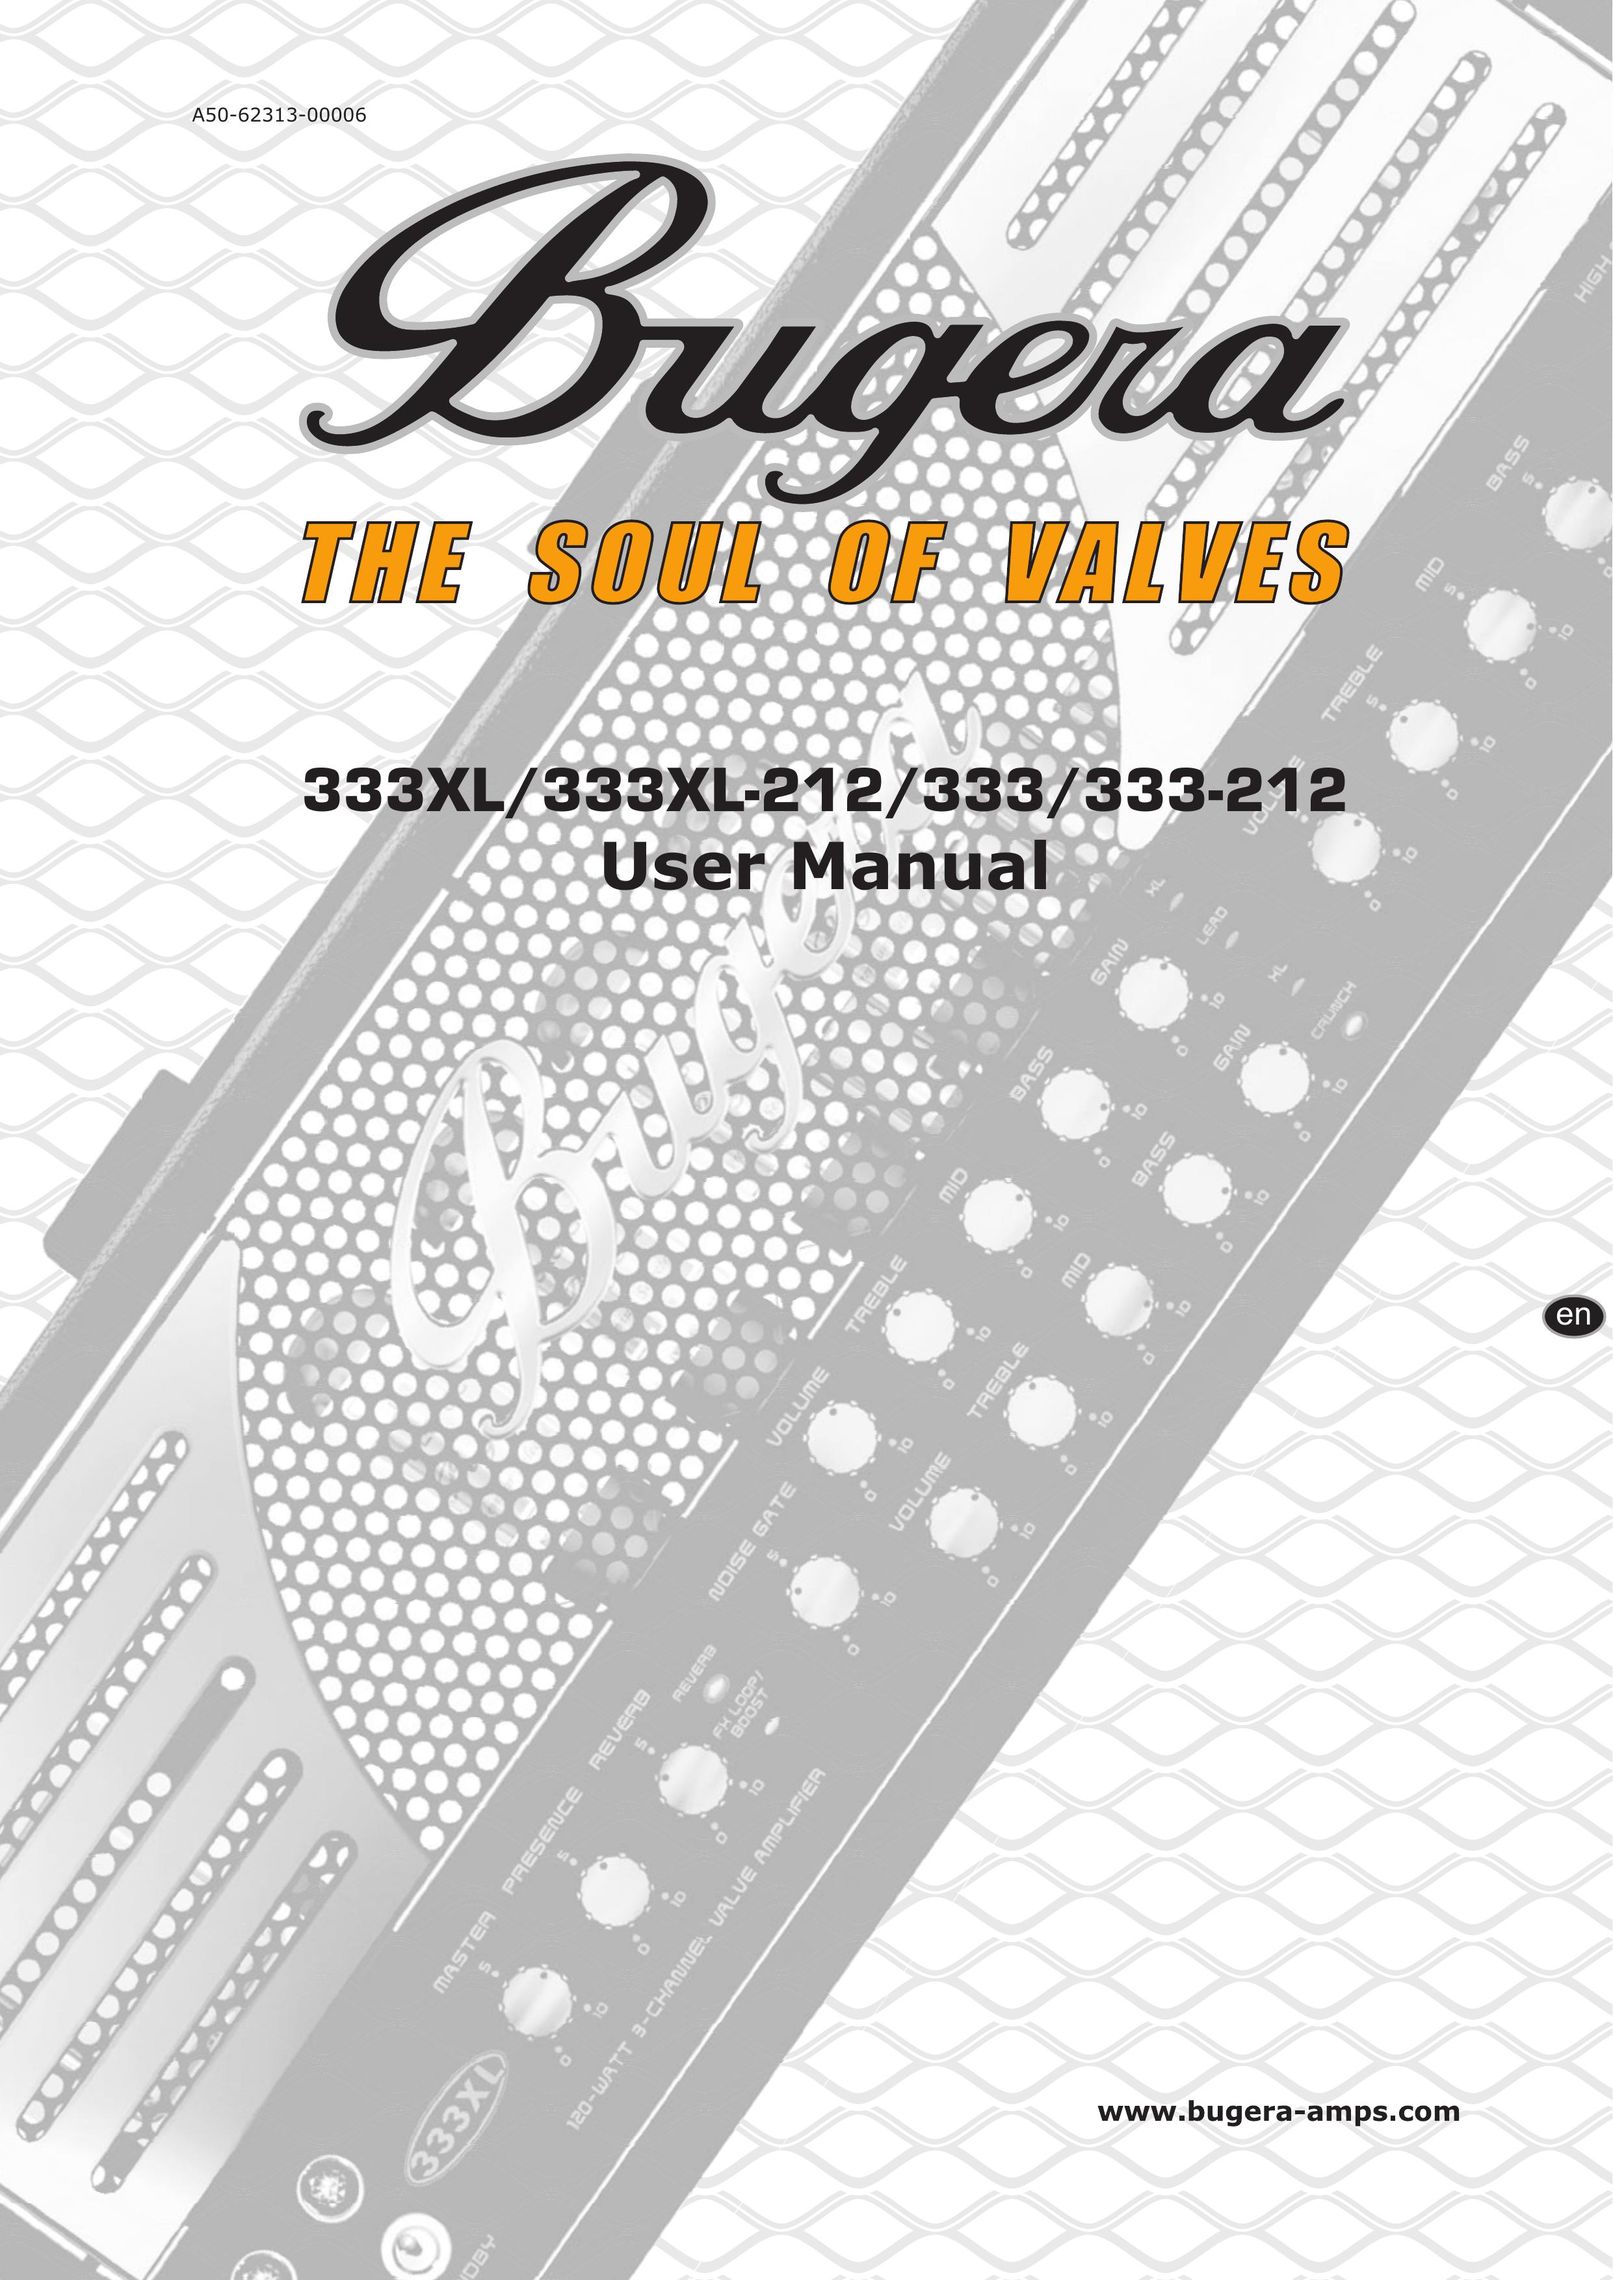 Behringer 333XL-212 Stereo Amplifier User Manual